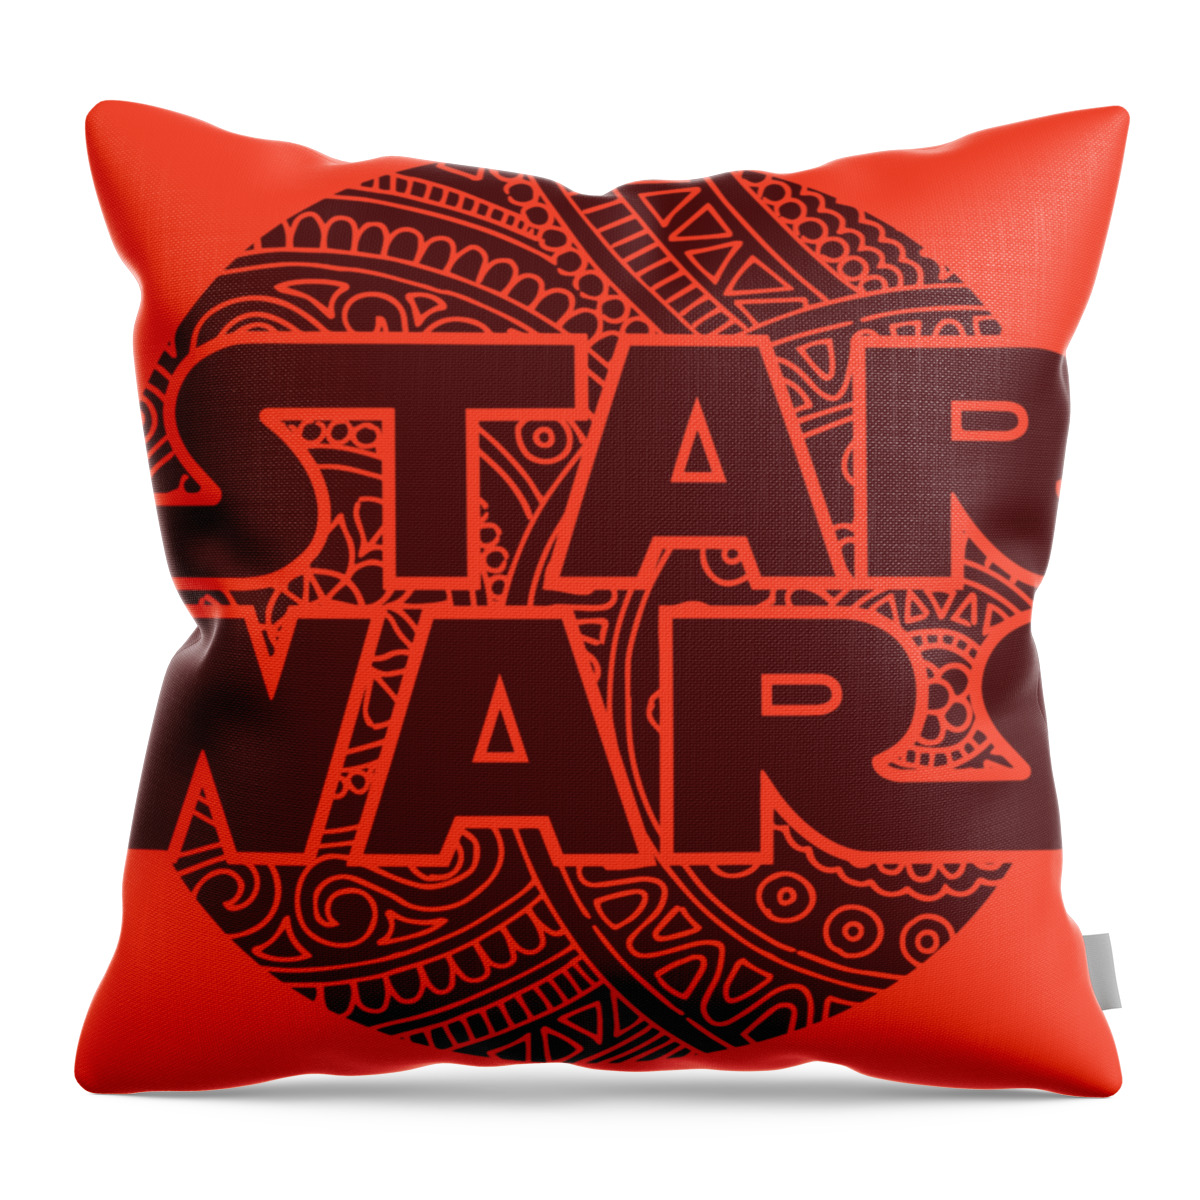 Star Wars Throw Pillow featuring the mixed media Star Wars Art - Logo - Red 02 by Studio Grafiikka